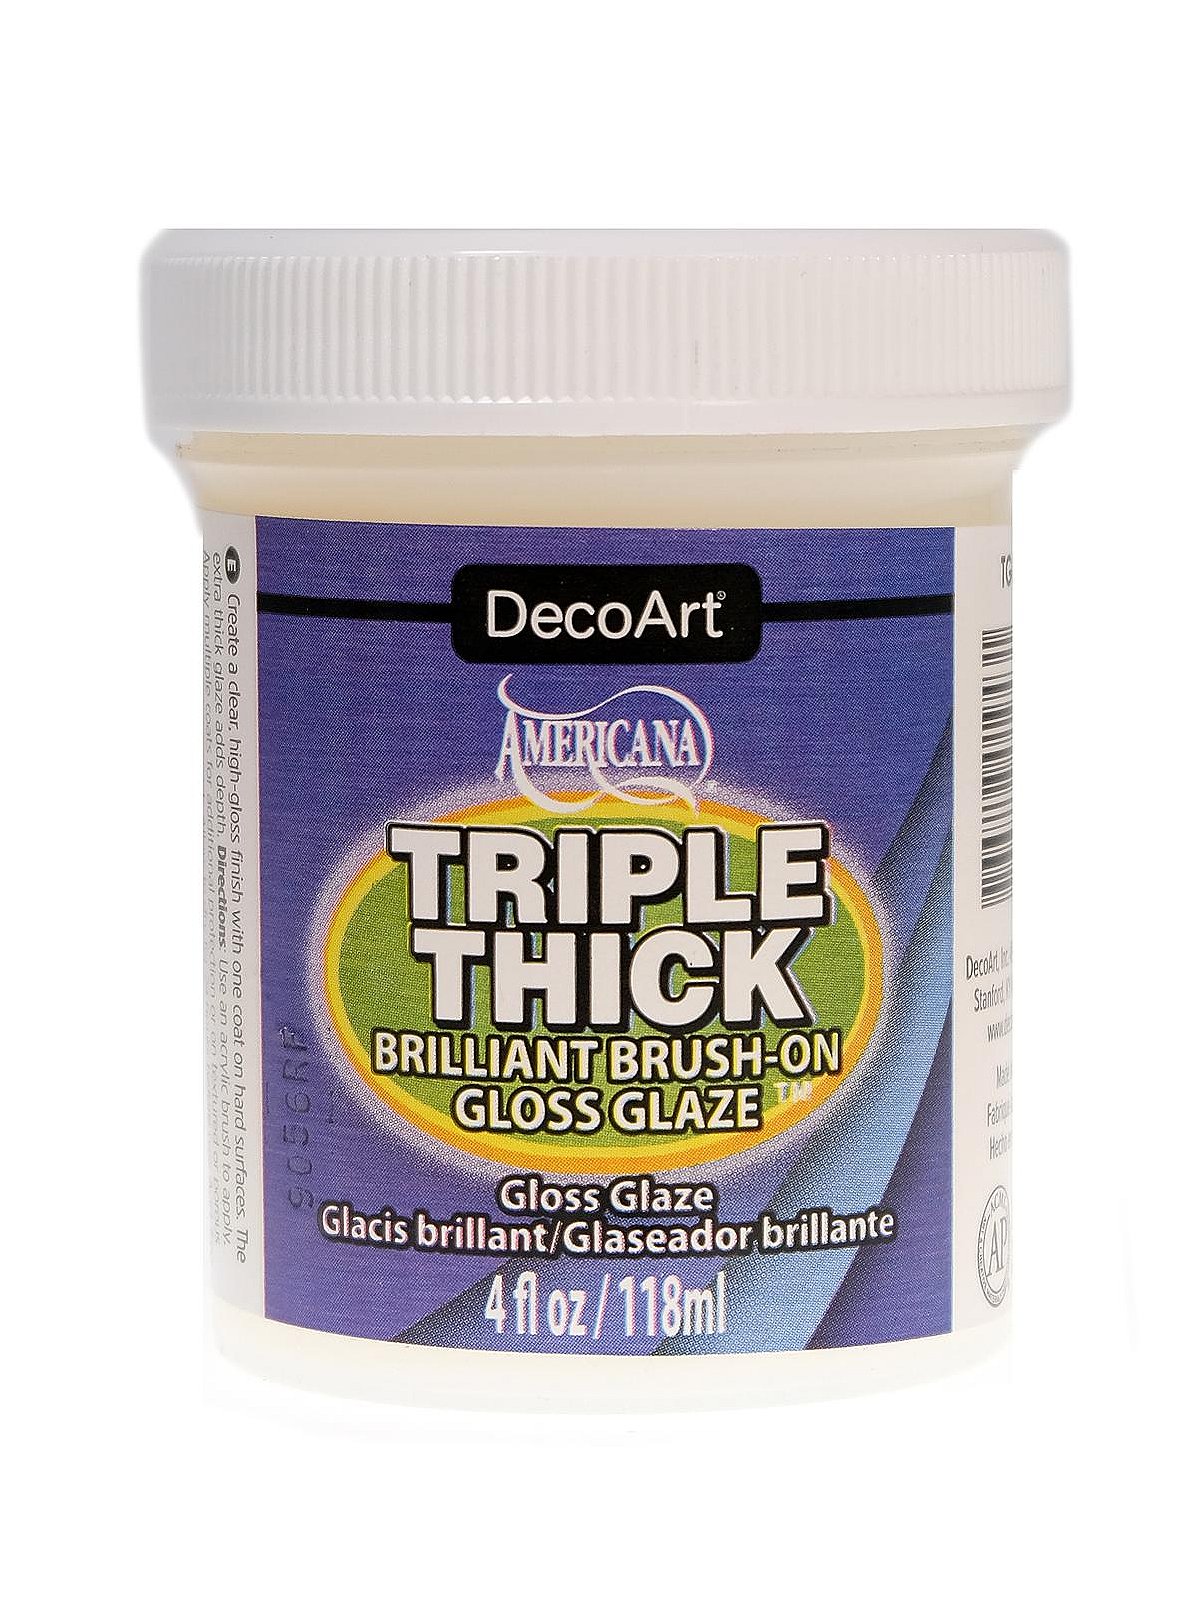 Decoart Americana Triple Thick Brilliant Brush on Gloss Glaze 2oz